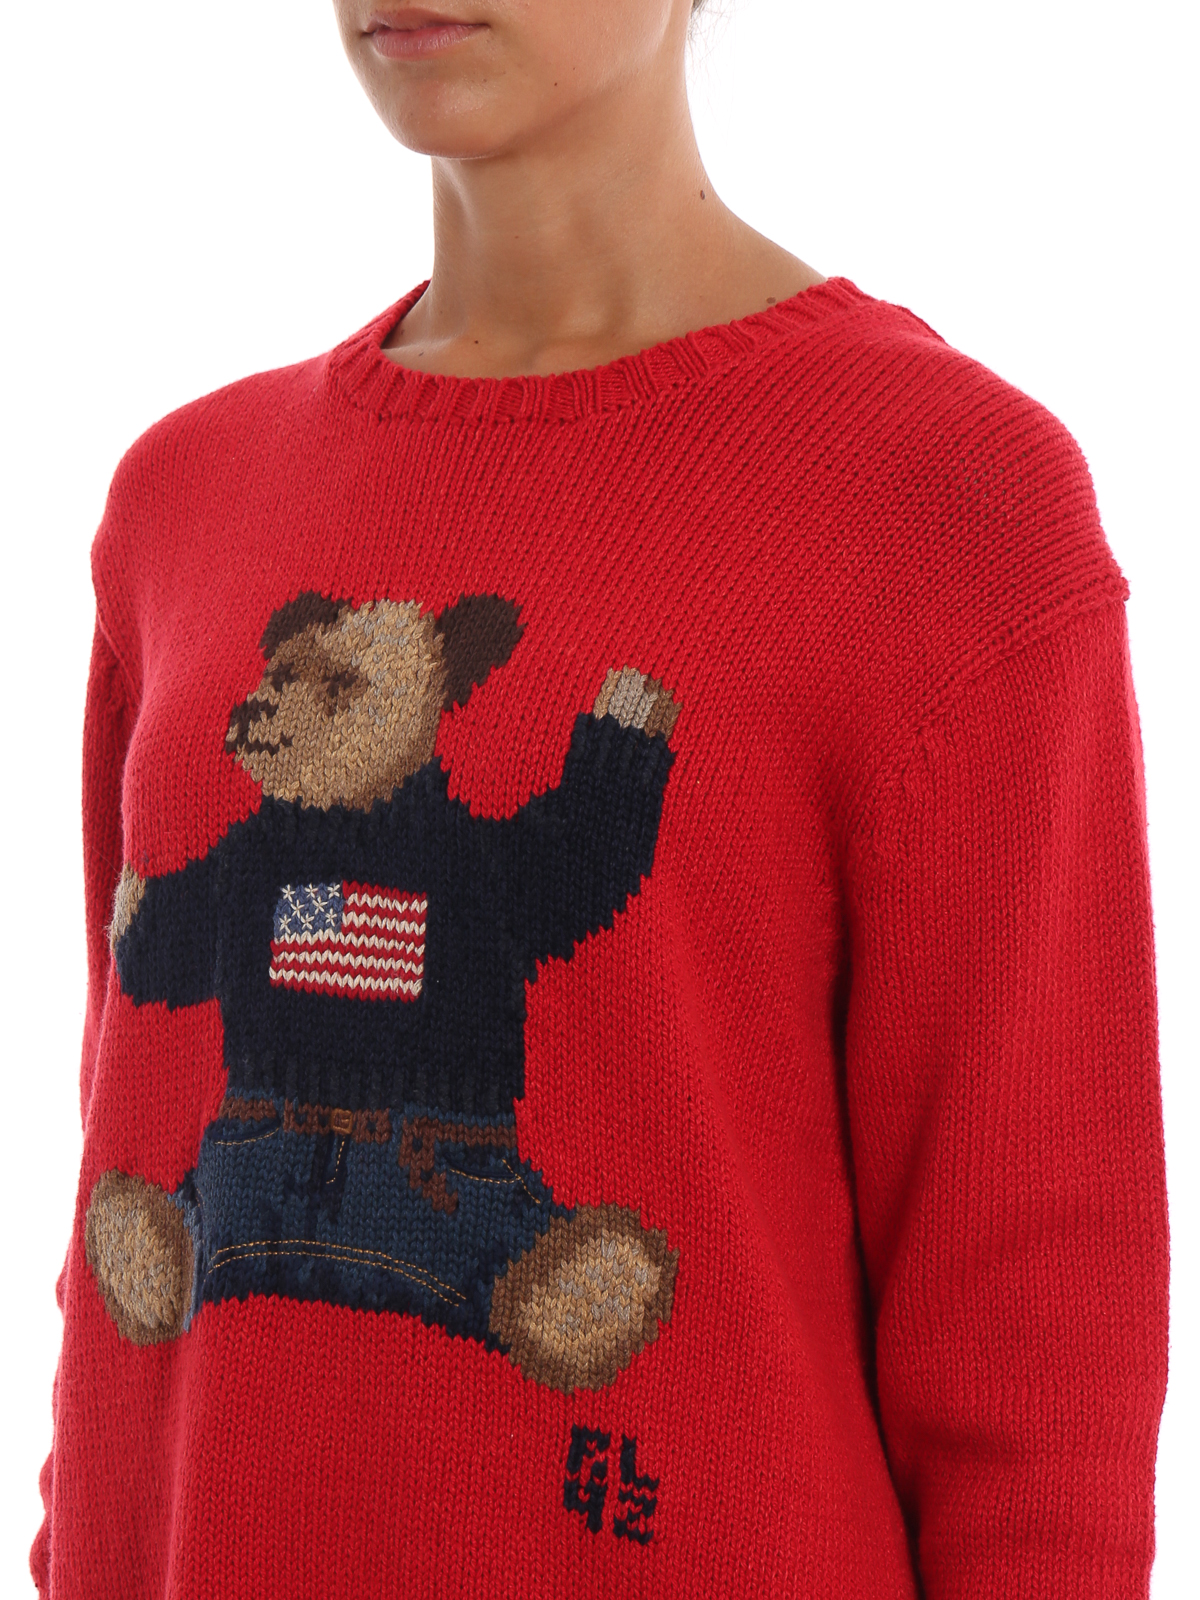 red polo teddy bear sweater